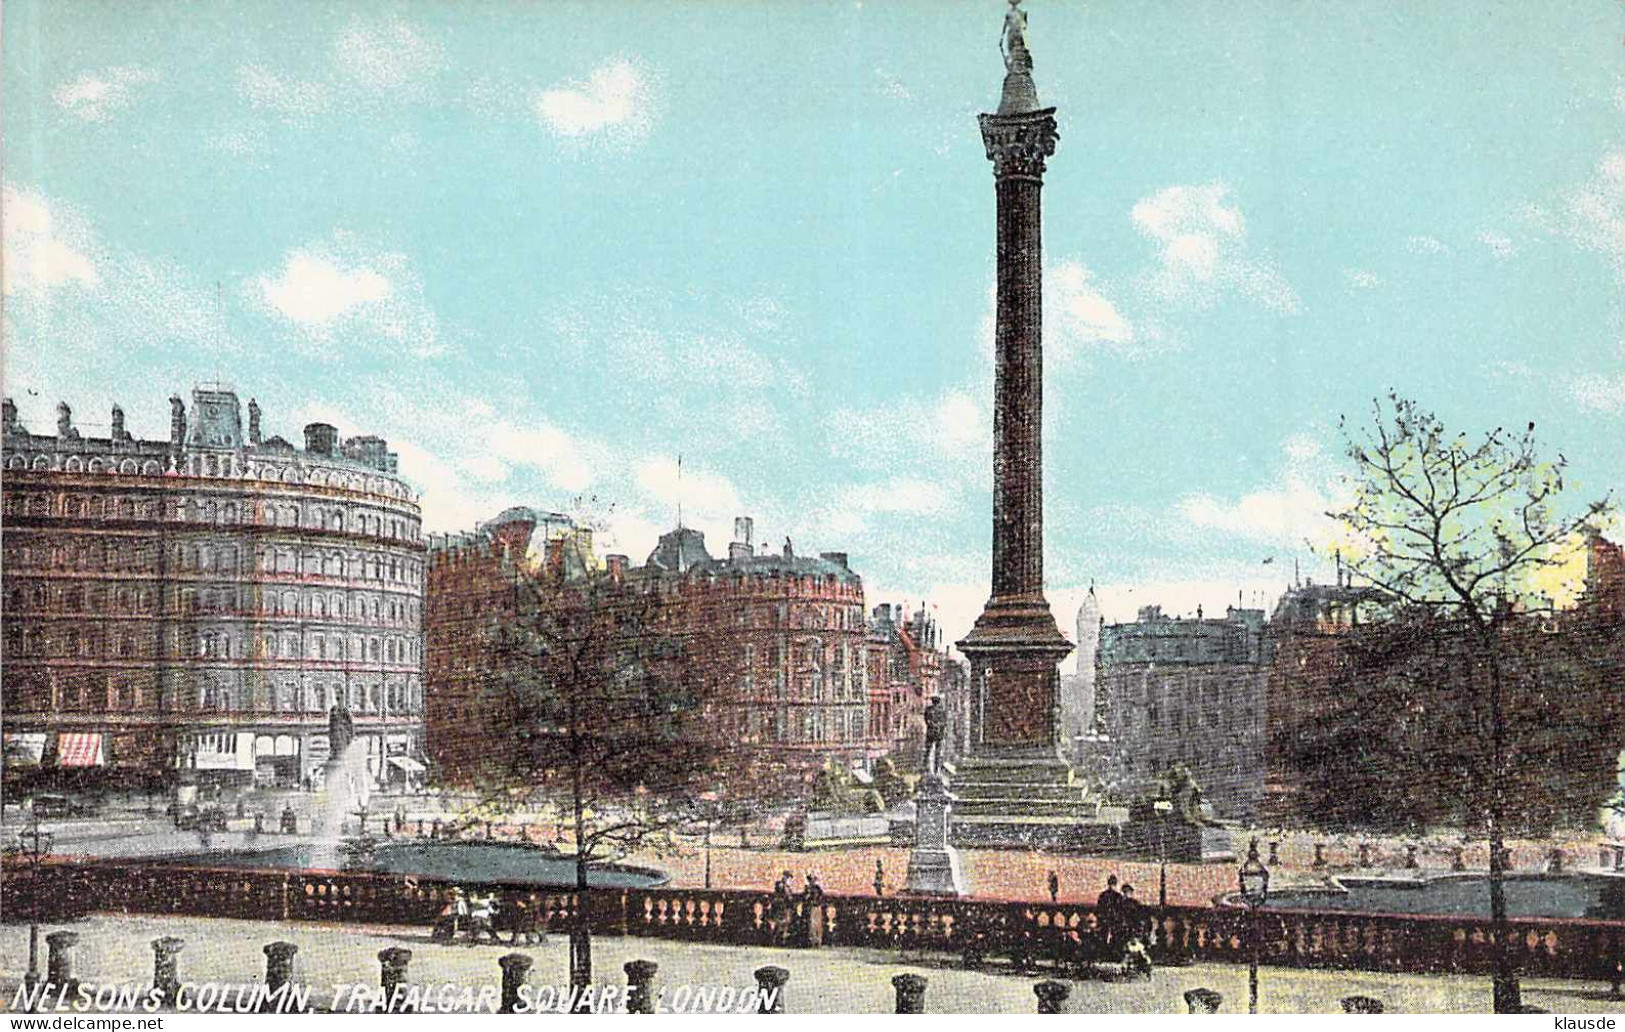 Nelsons Column,Trafalgar Square, London - Trafalgar Square